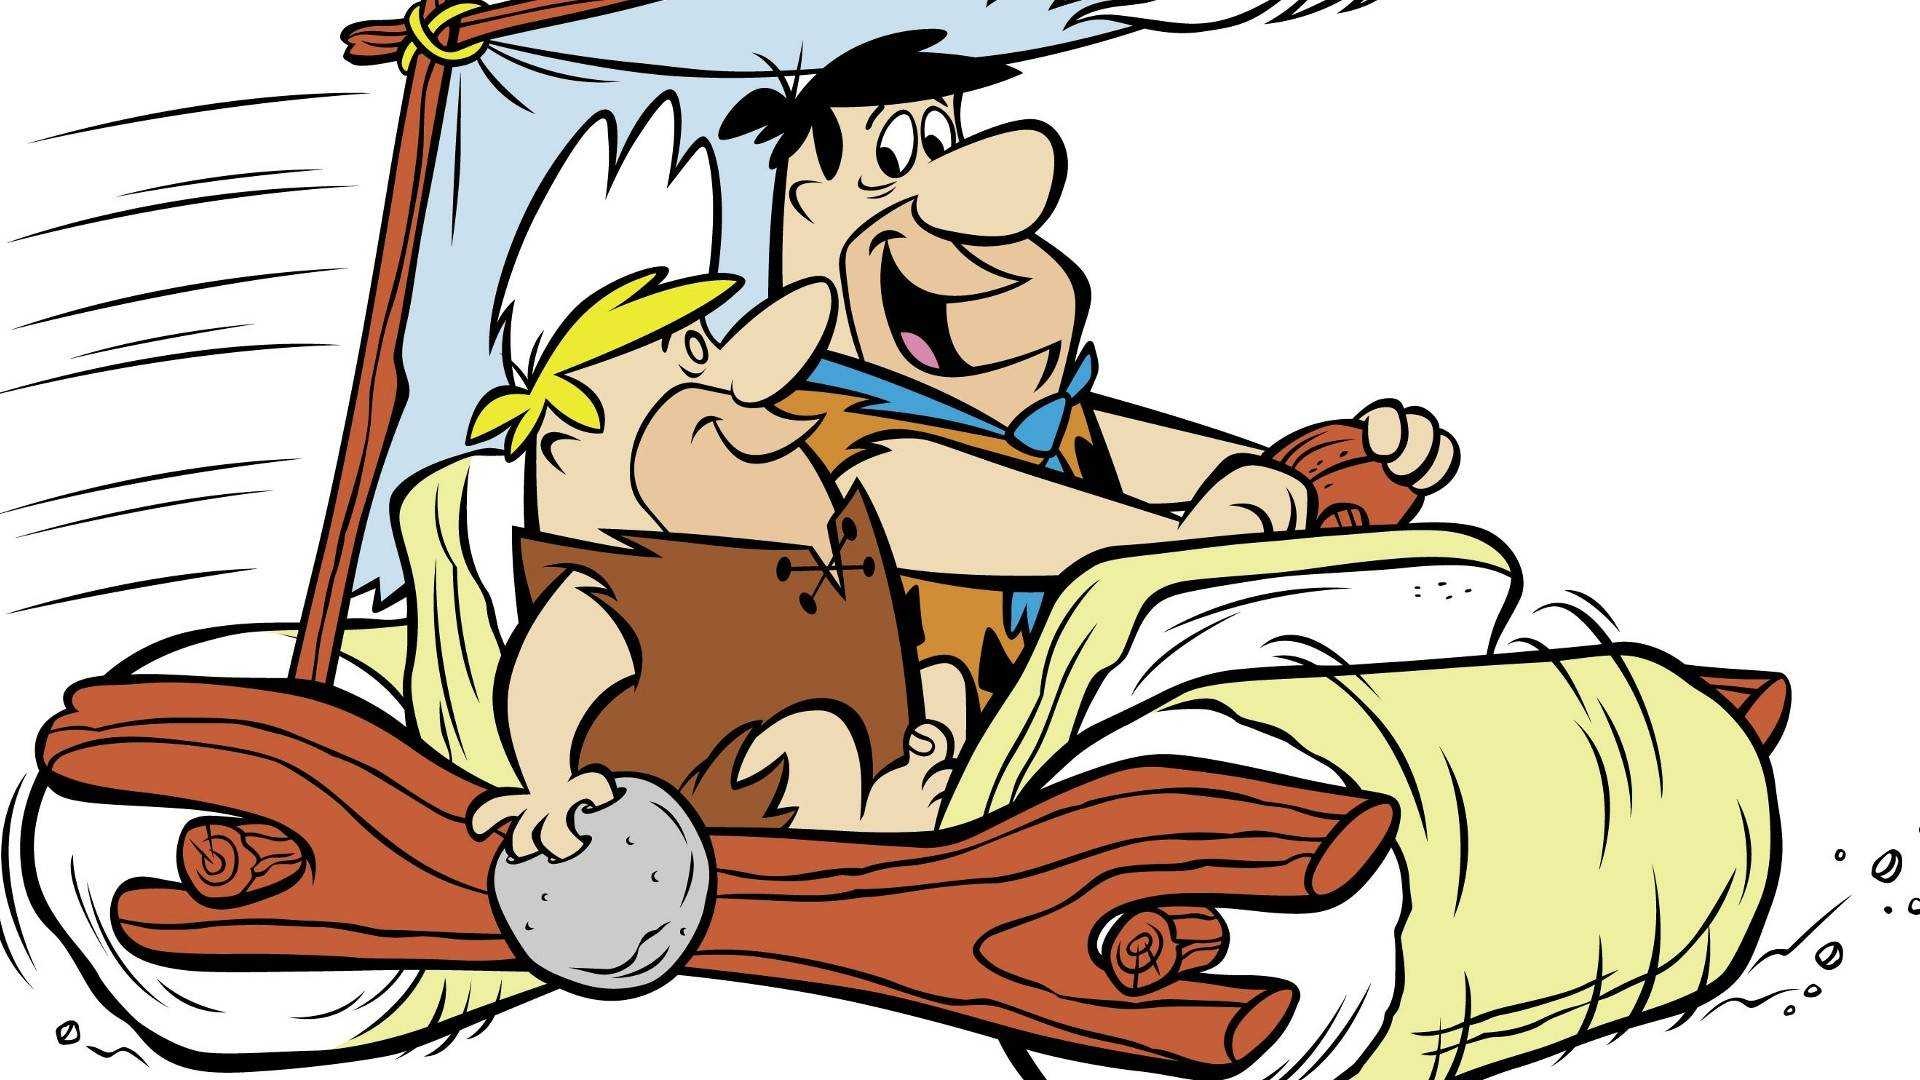 Flintstones cartoon, Animation nostalgia, Bedrock adventures, Stone Age humor, 1920x1080 Full HD Desktop